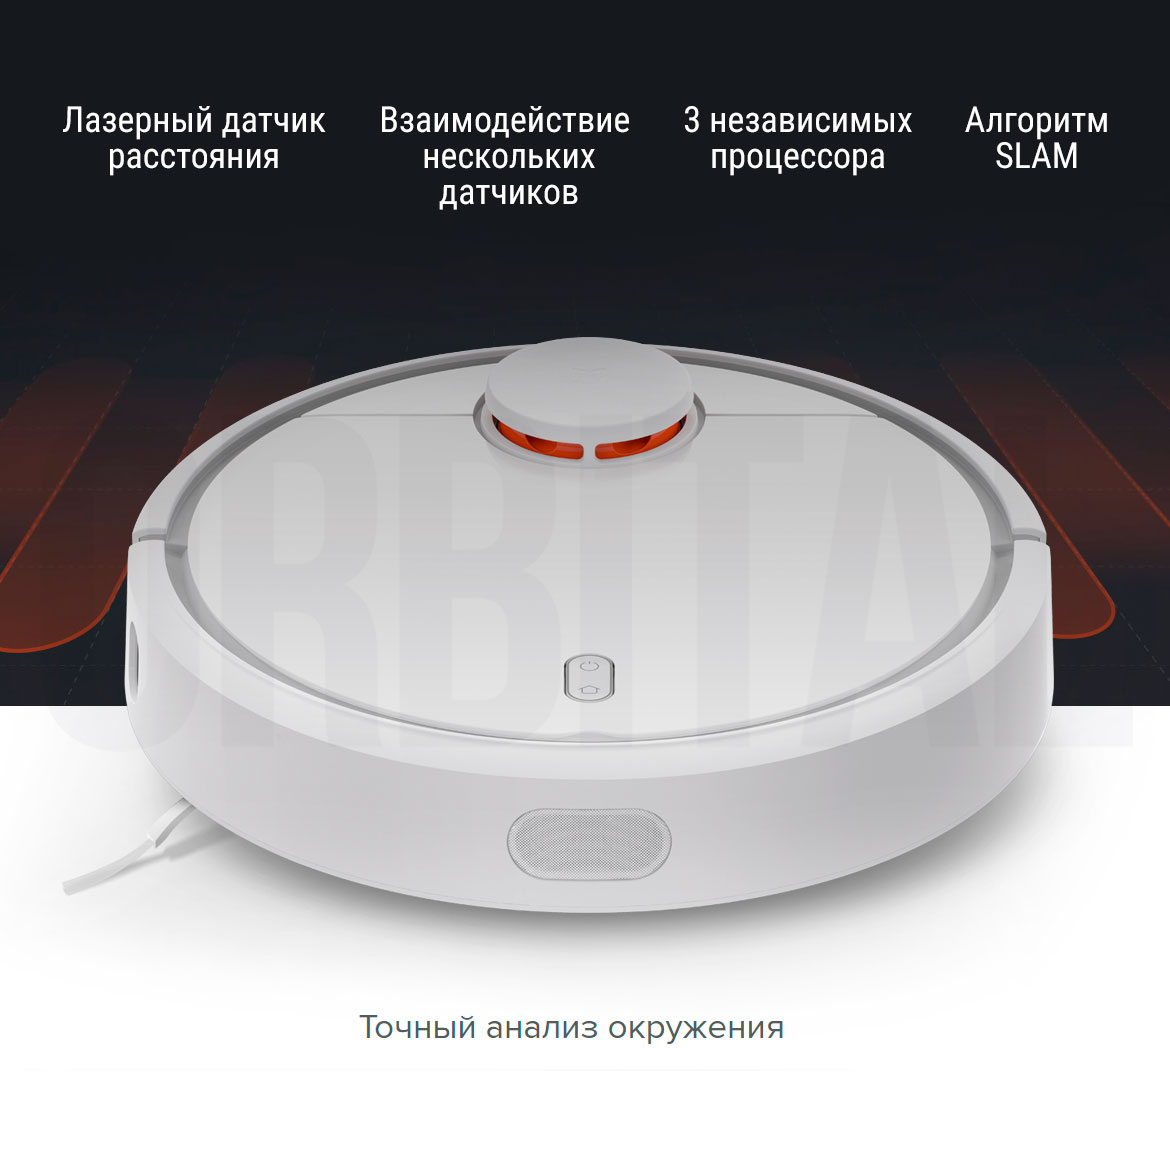 Xiaomi Vacuum Cleaner Установка Русского Языка